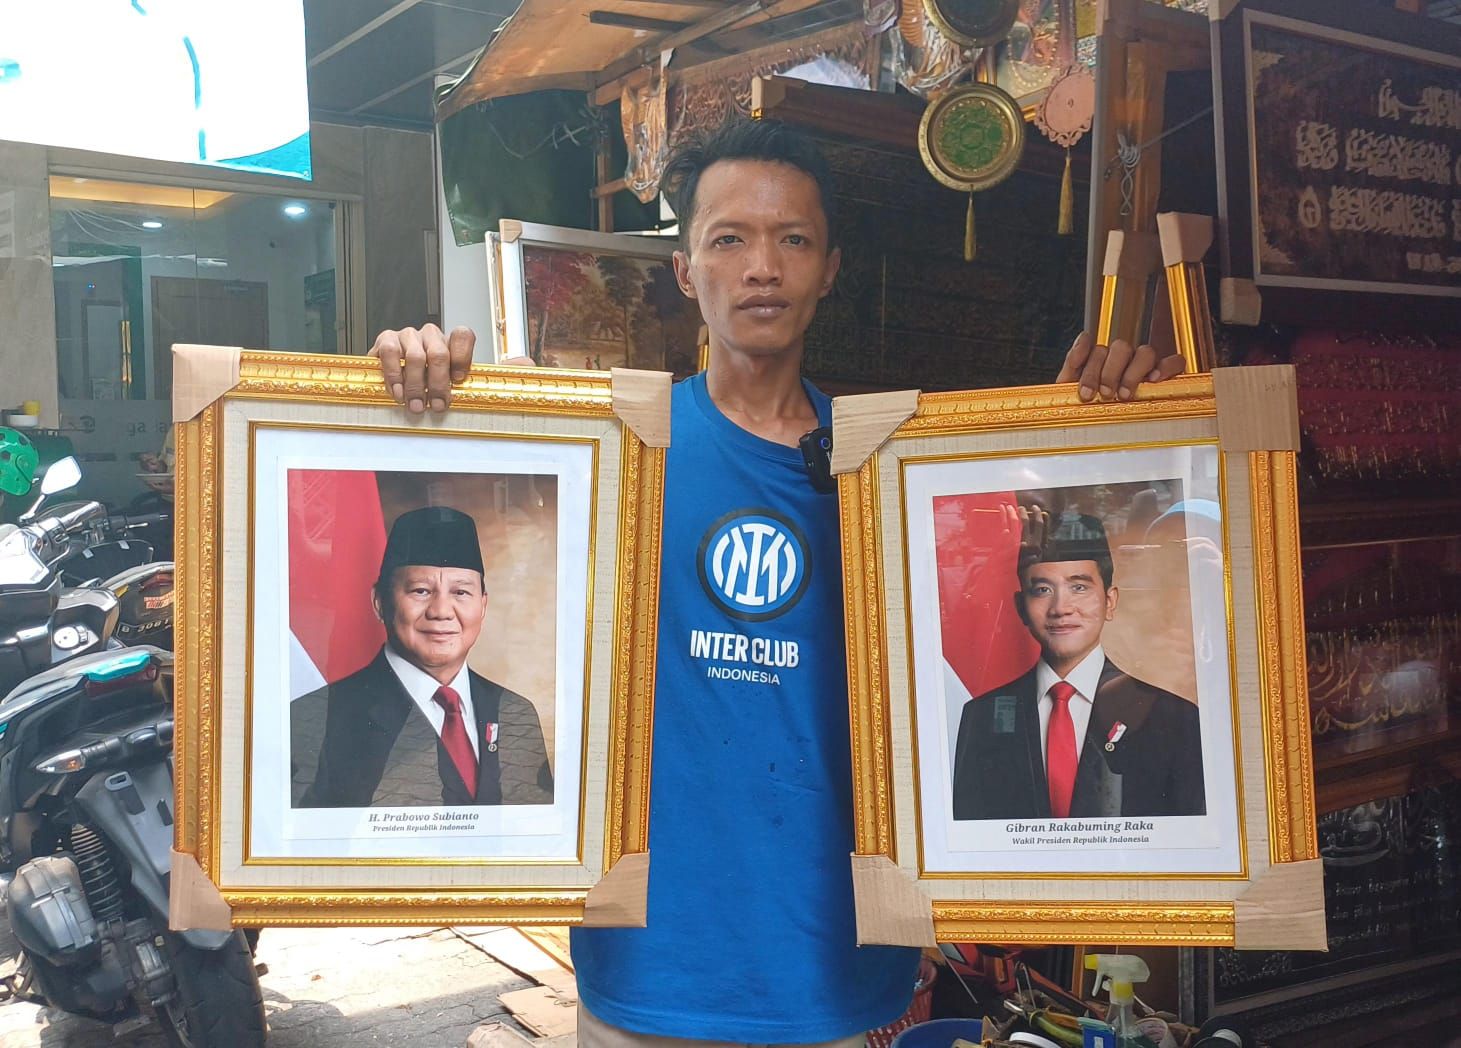 Saat Pedagang Kecil Jaga Marwah Kebangsaan, Belum Jual Foto Prabowo-Gibran meski Sudah Jadi Pemenang 